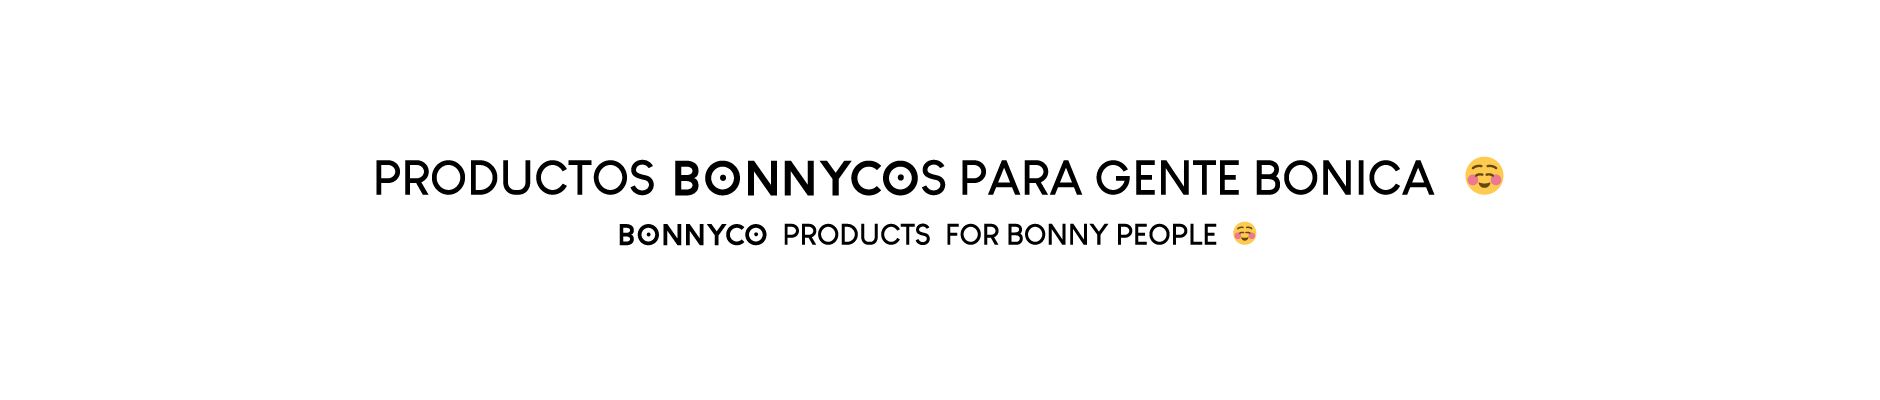 BONNYCO – Bonnyco products for bonny people